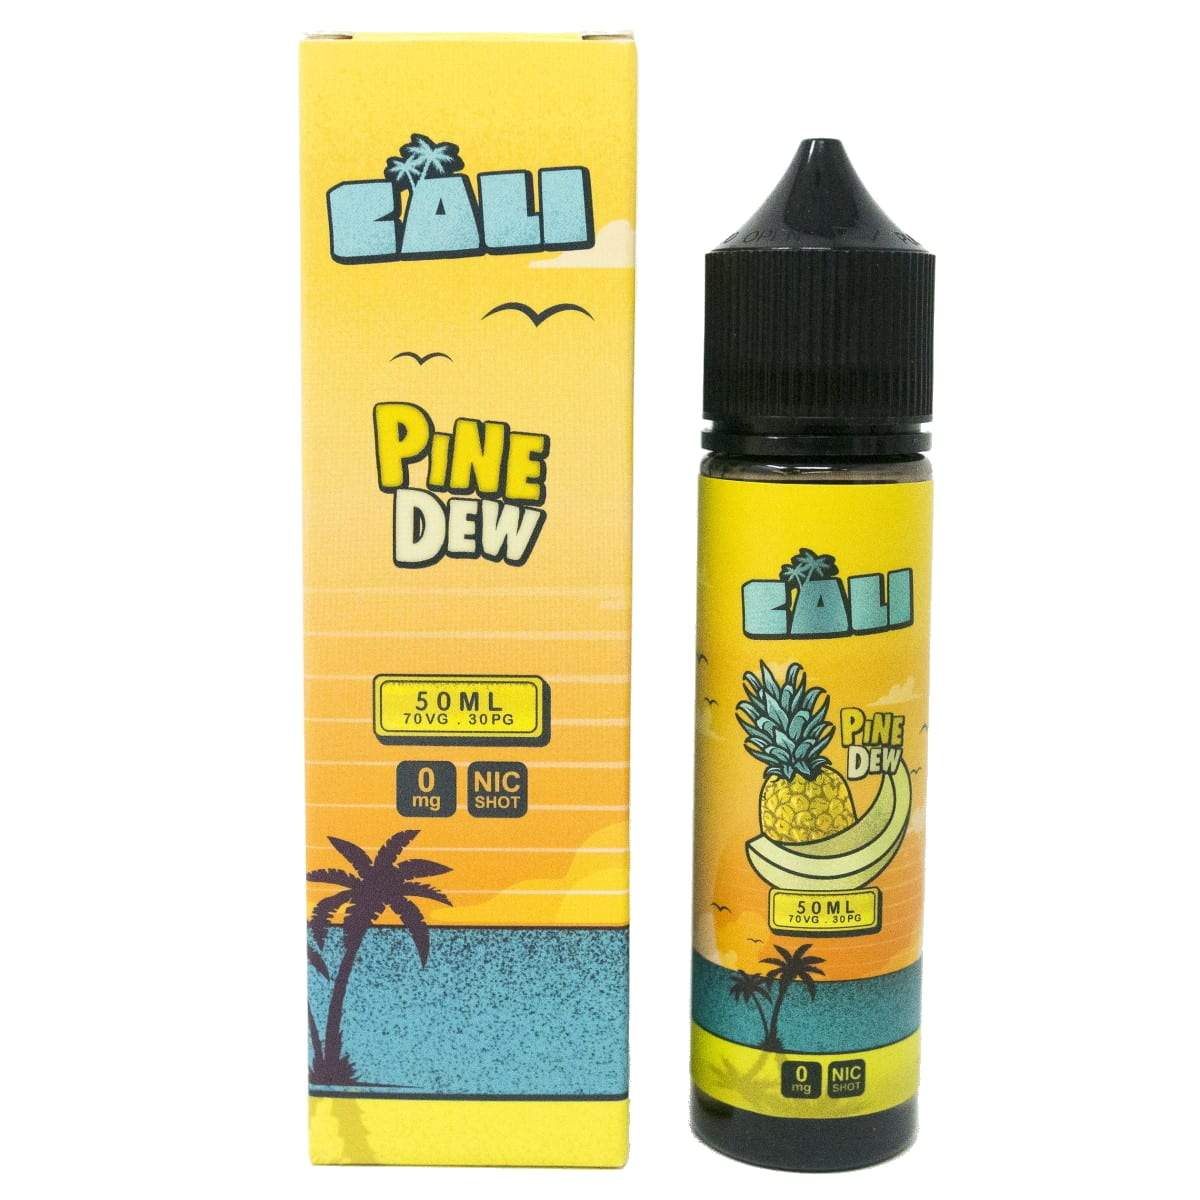 Cali Pine Dew E-Liquid 50ml Shortfill